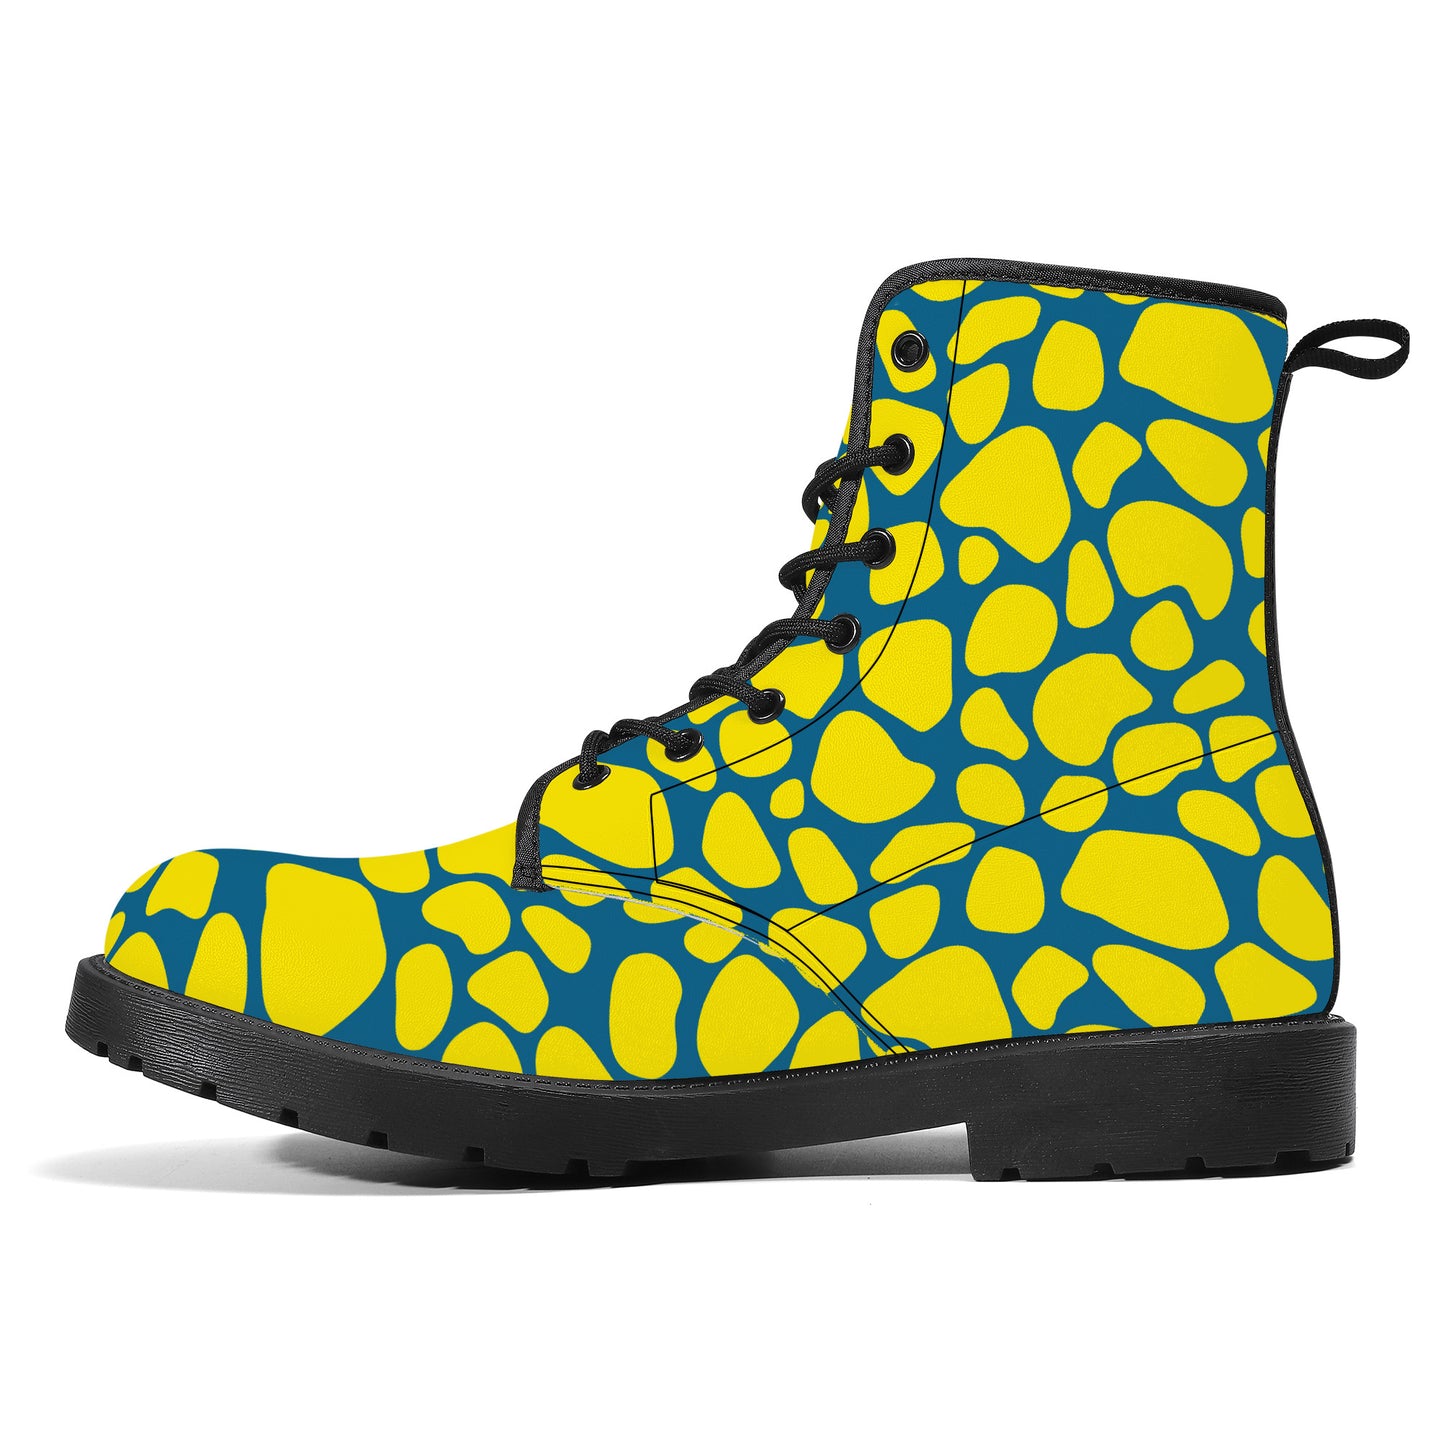 "Giraffe" Eco-friendly Boots